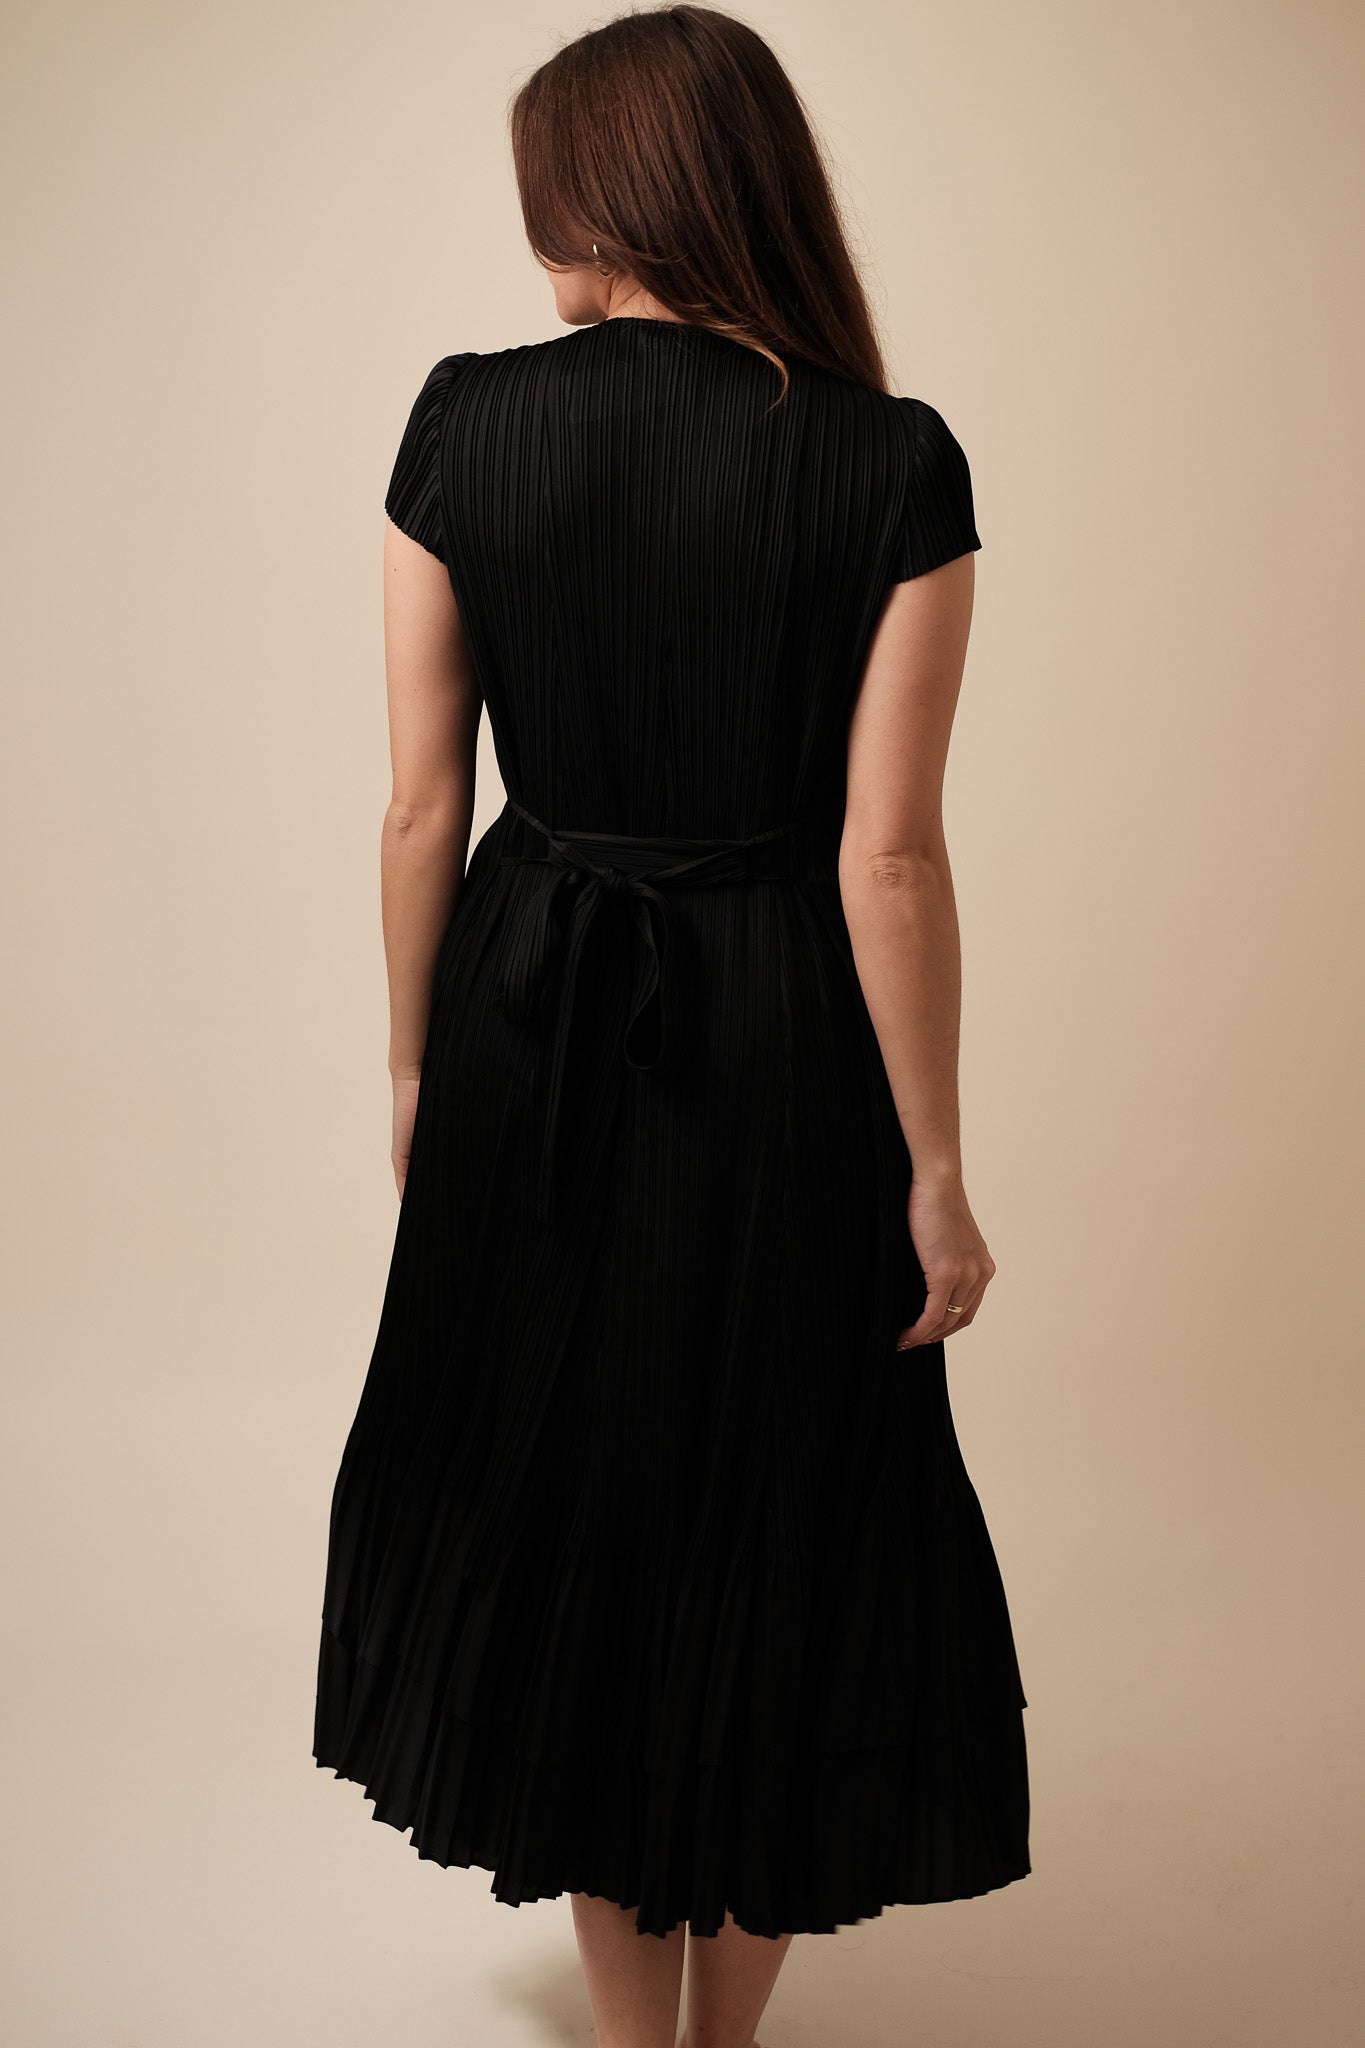 Current Air Helen Pleated Color Block Midi Dress (Black)